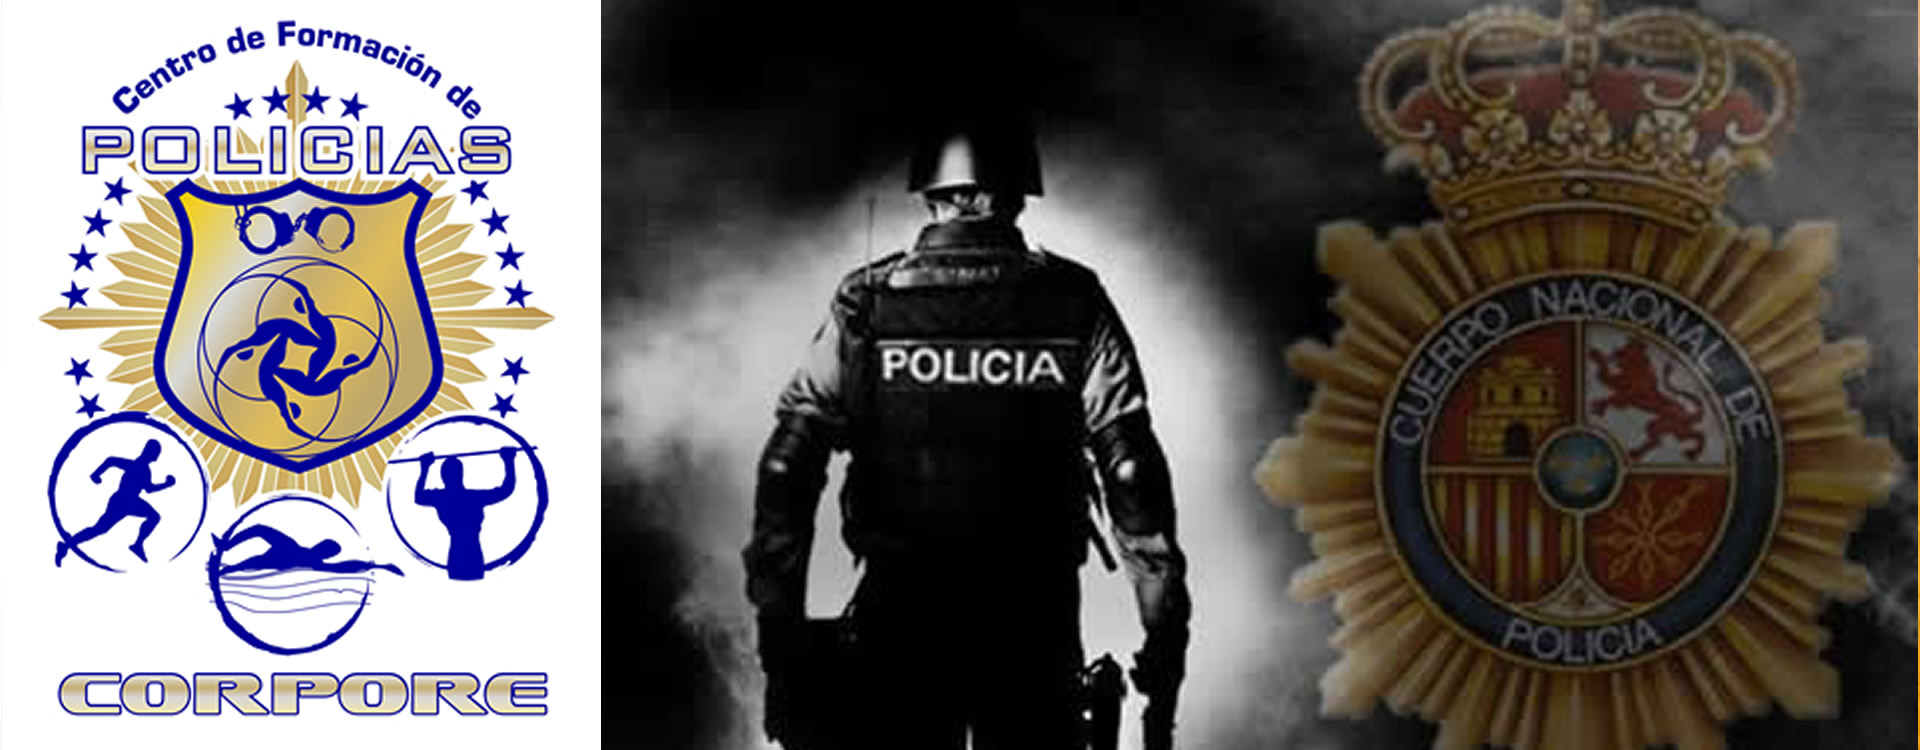 Academia de policia madrid